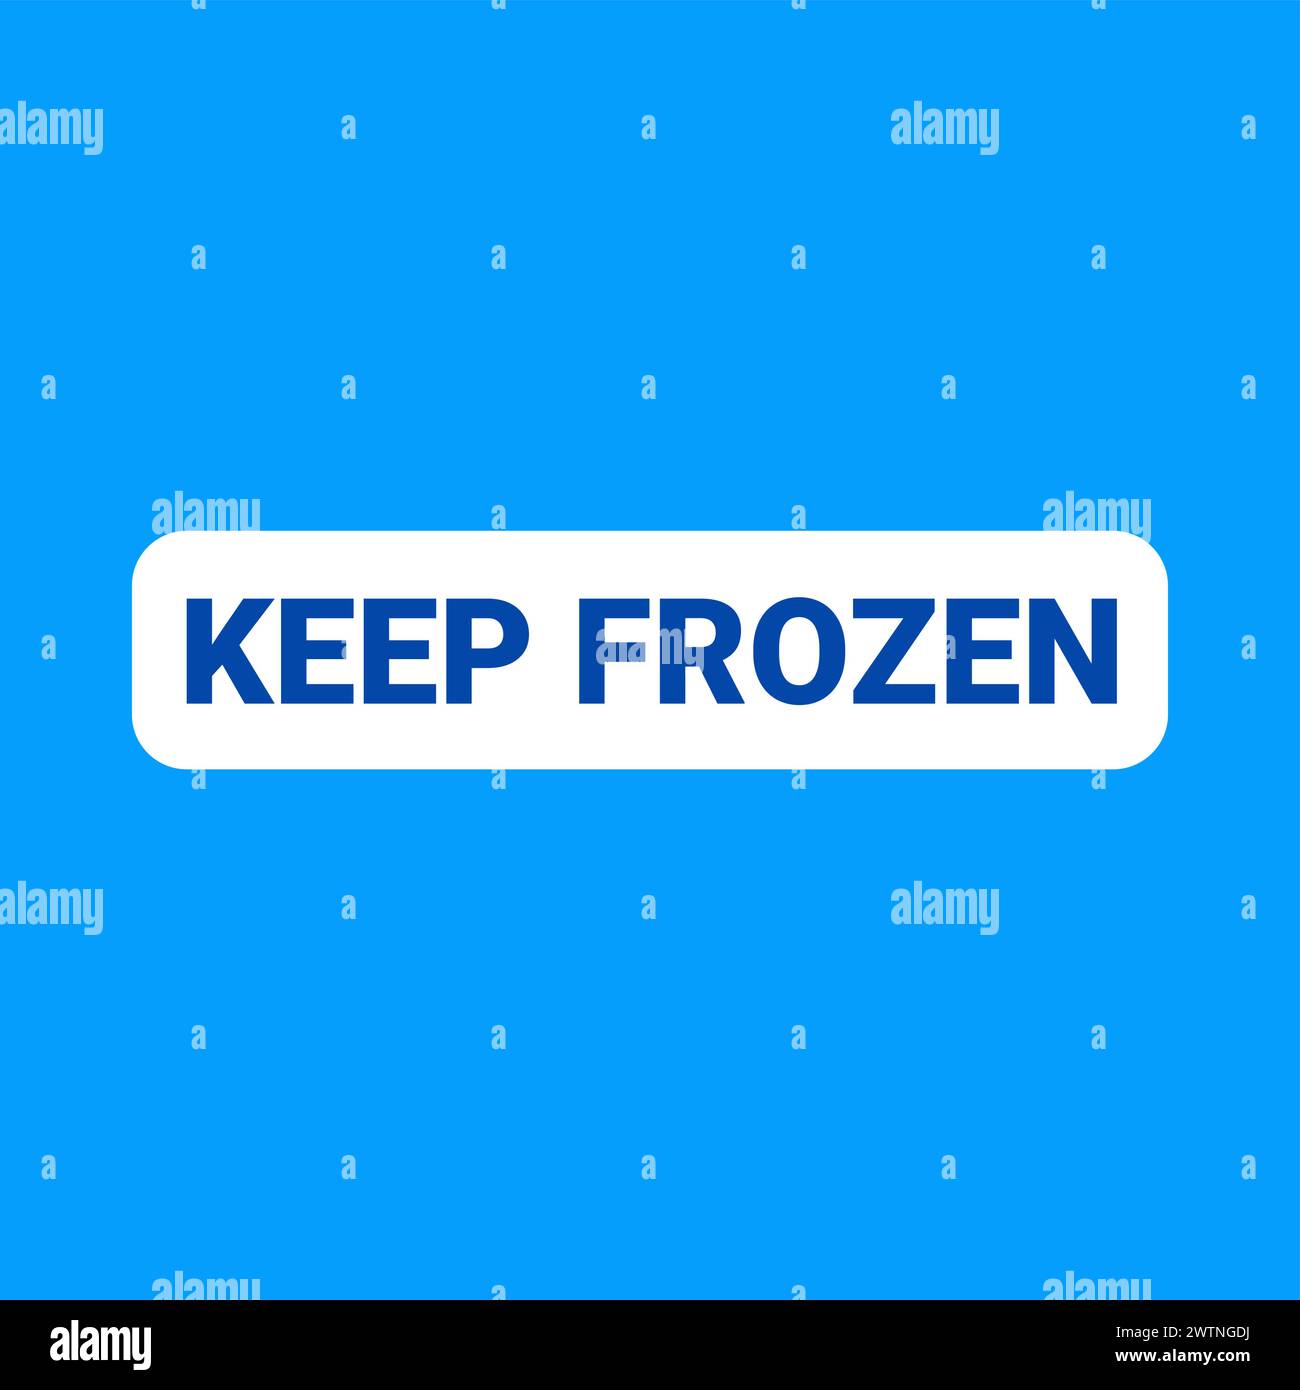 Keep frozen vector logo illustration. Frozen product label badge pictogram. Winter frozen food symbol sticker packaging. Stock Vector